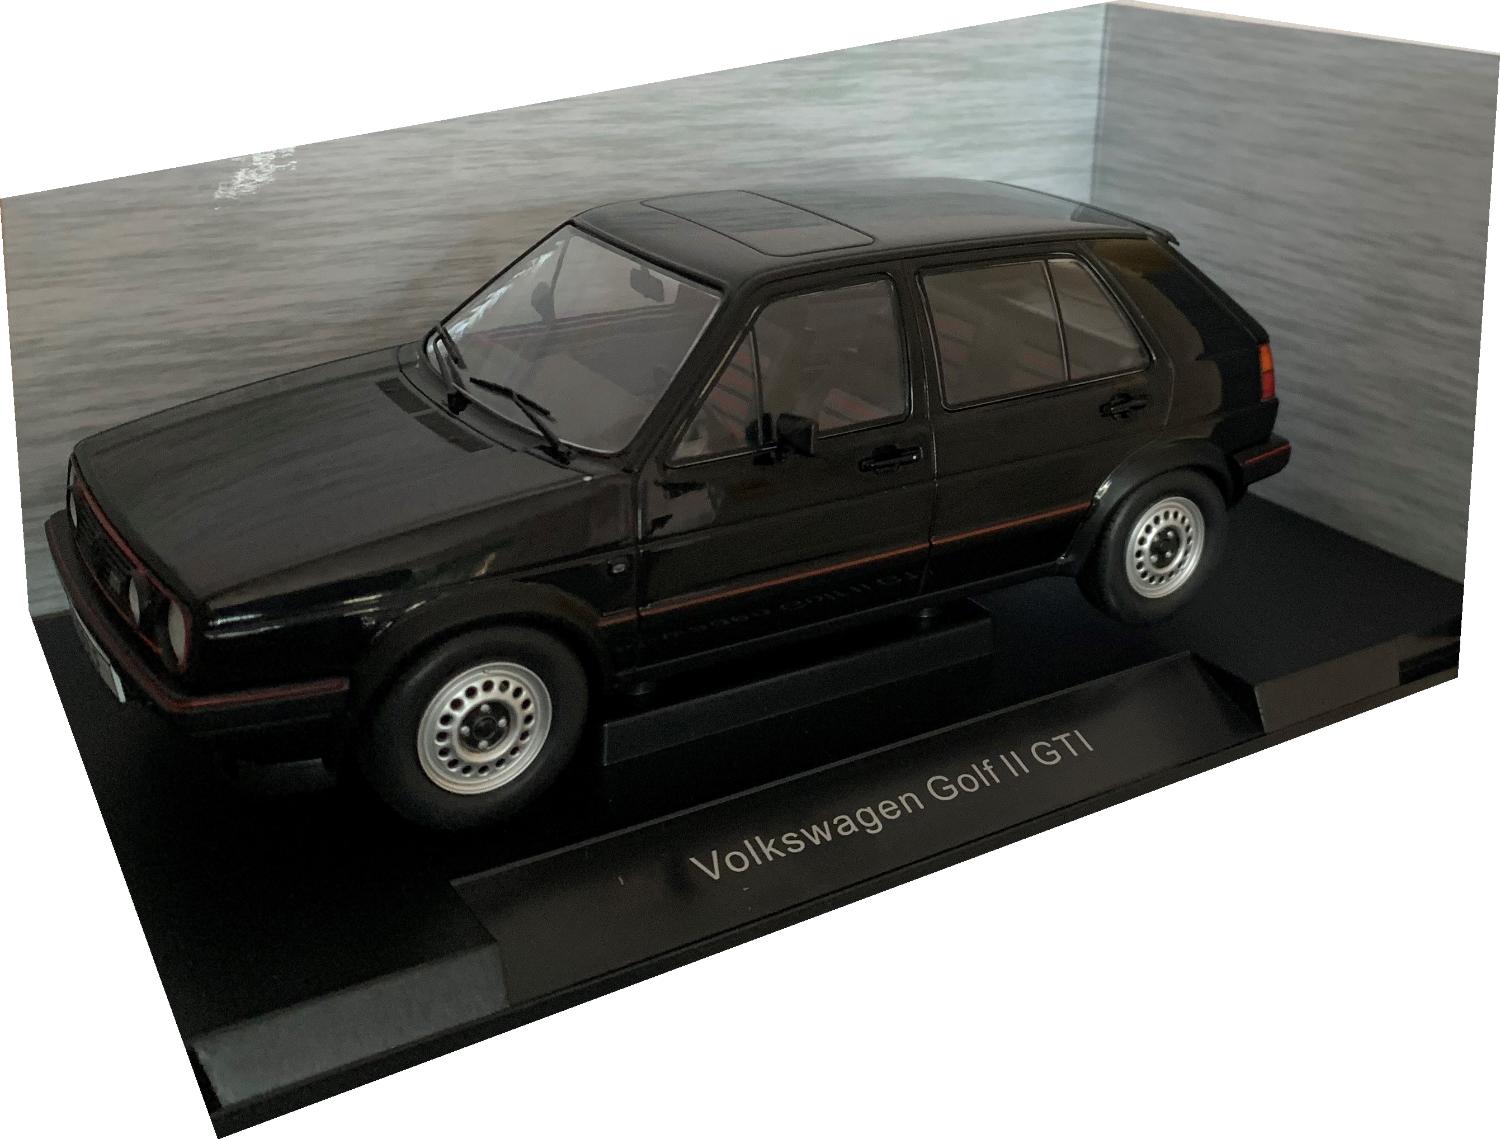 VW Golf GTI  mark 2, 1984 in black 1:18 scale model from Motor Car Group